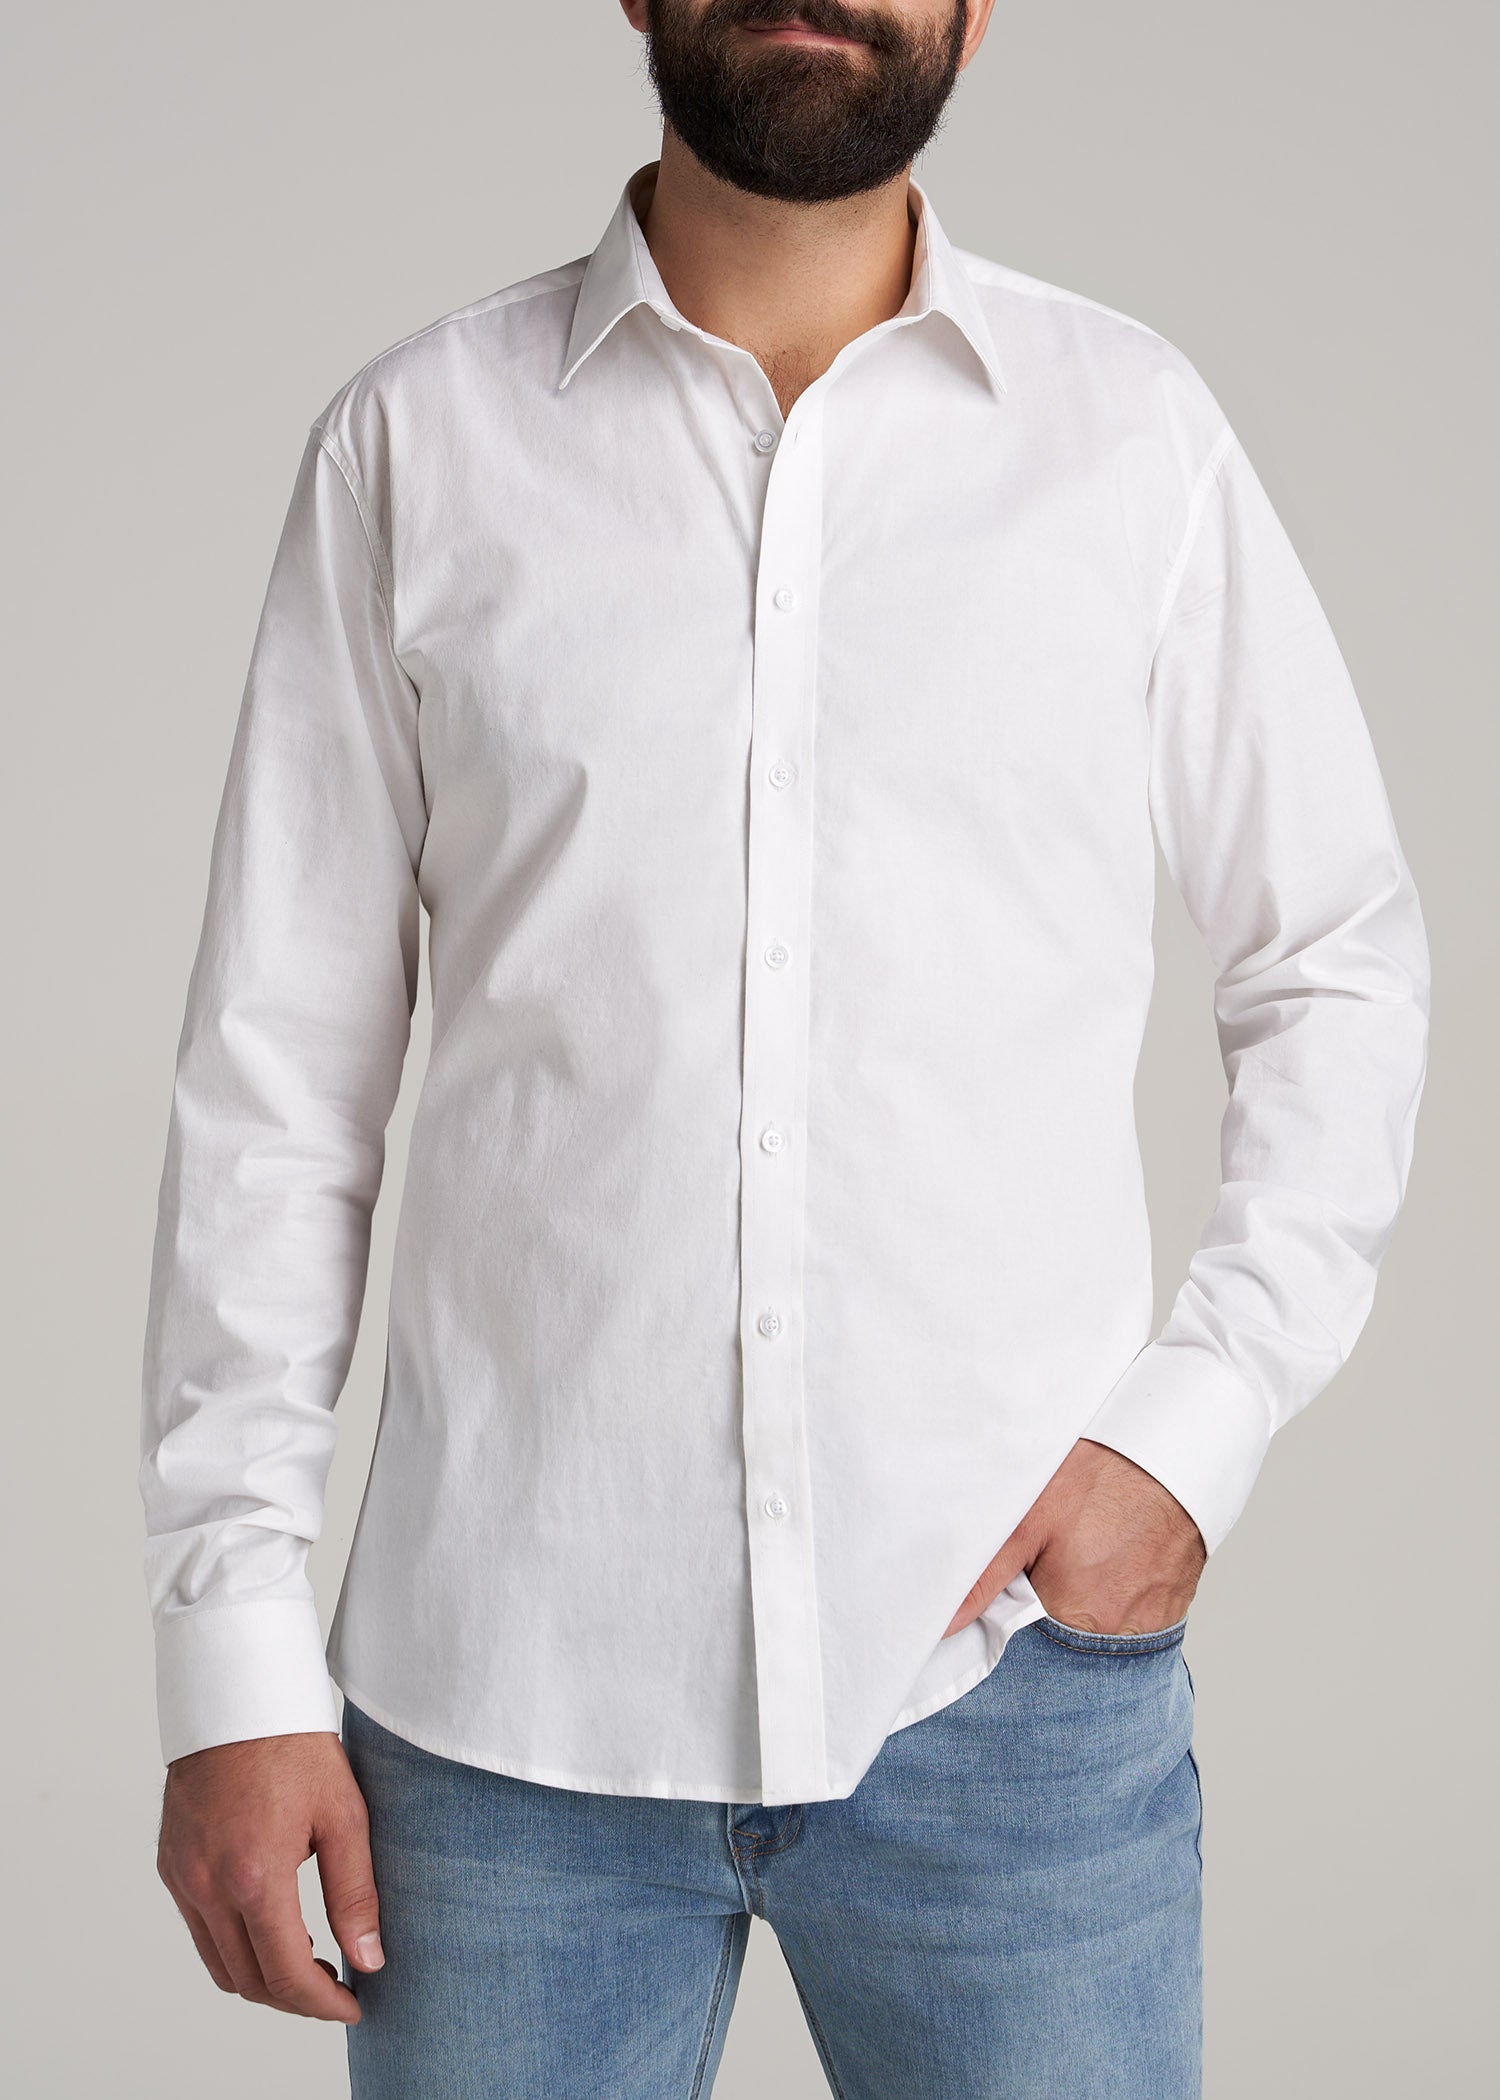 Mens Tall Shirts: Men's Tall Easy Care Bright White Shirts – American Tall